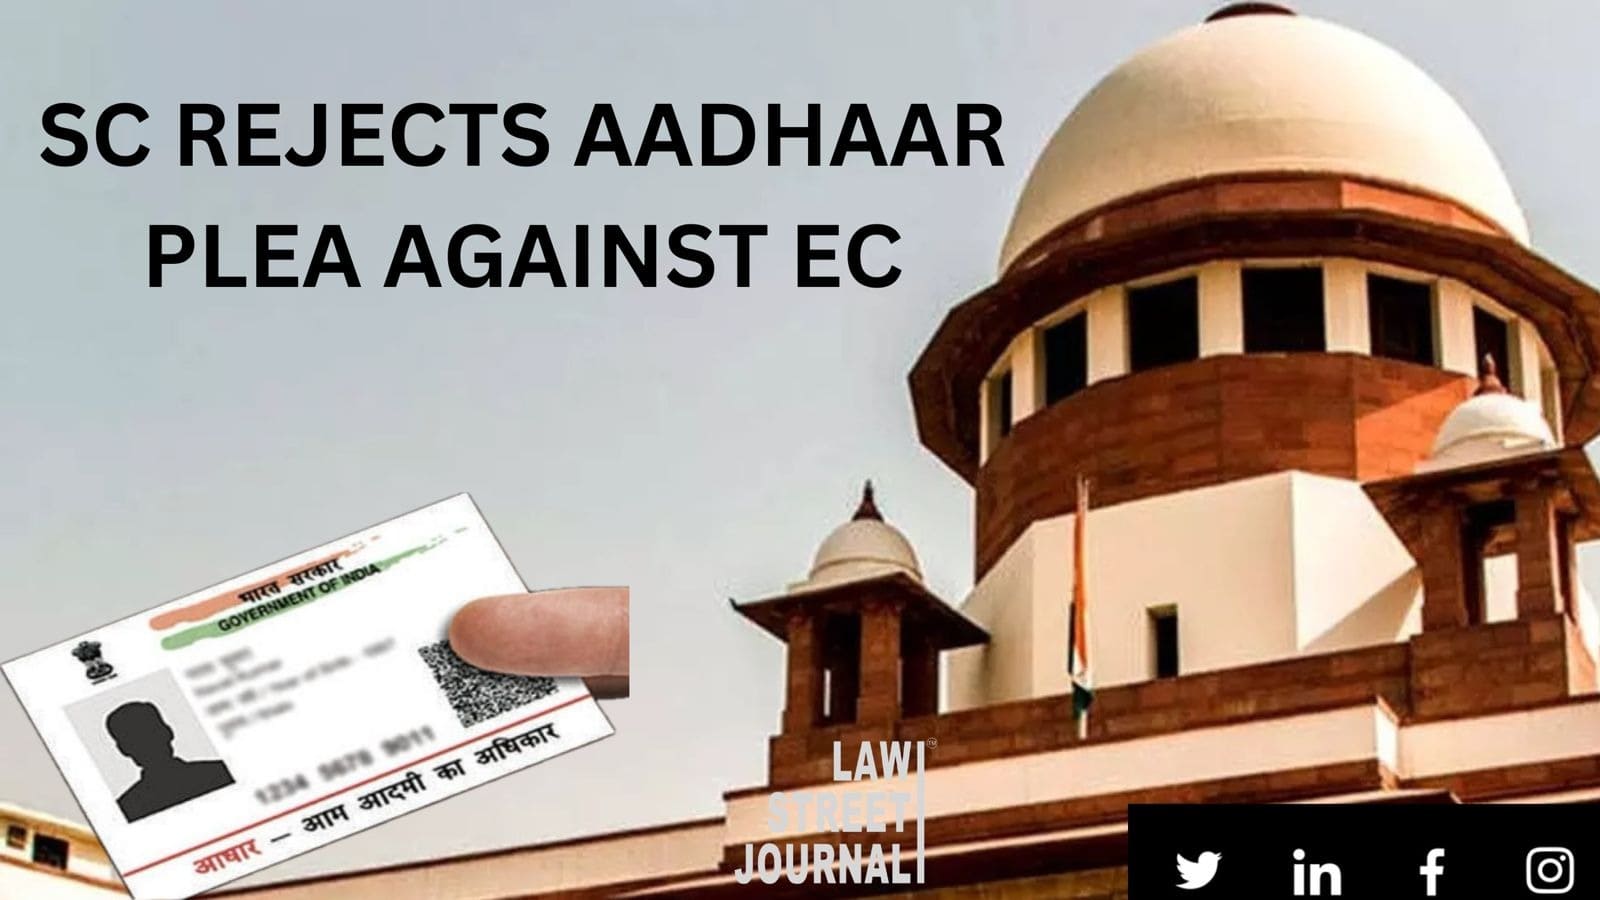 SC refuses to entertain plea for contempt against EC for seeking Aadhaar details for new electors 